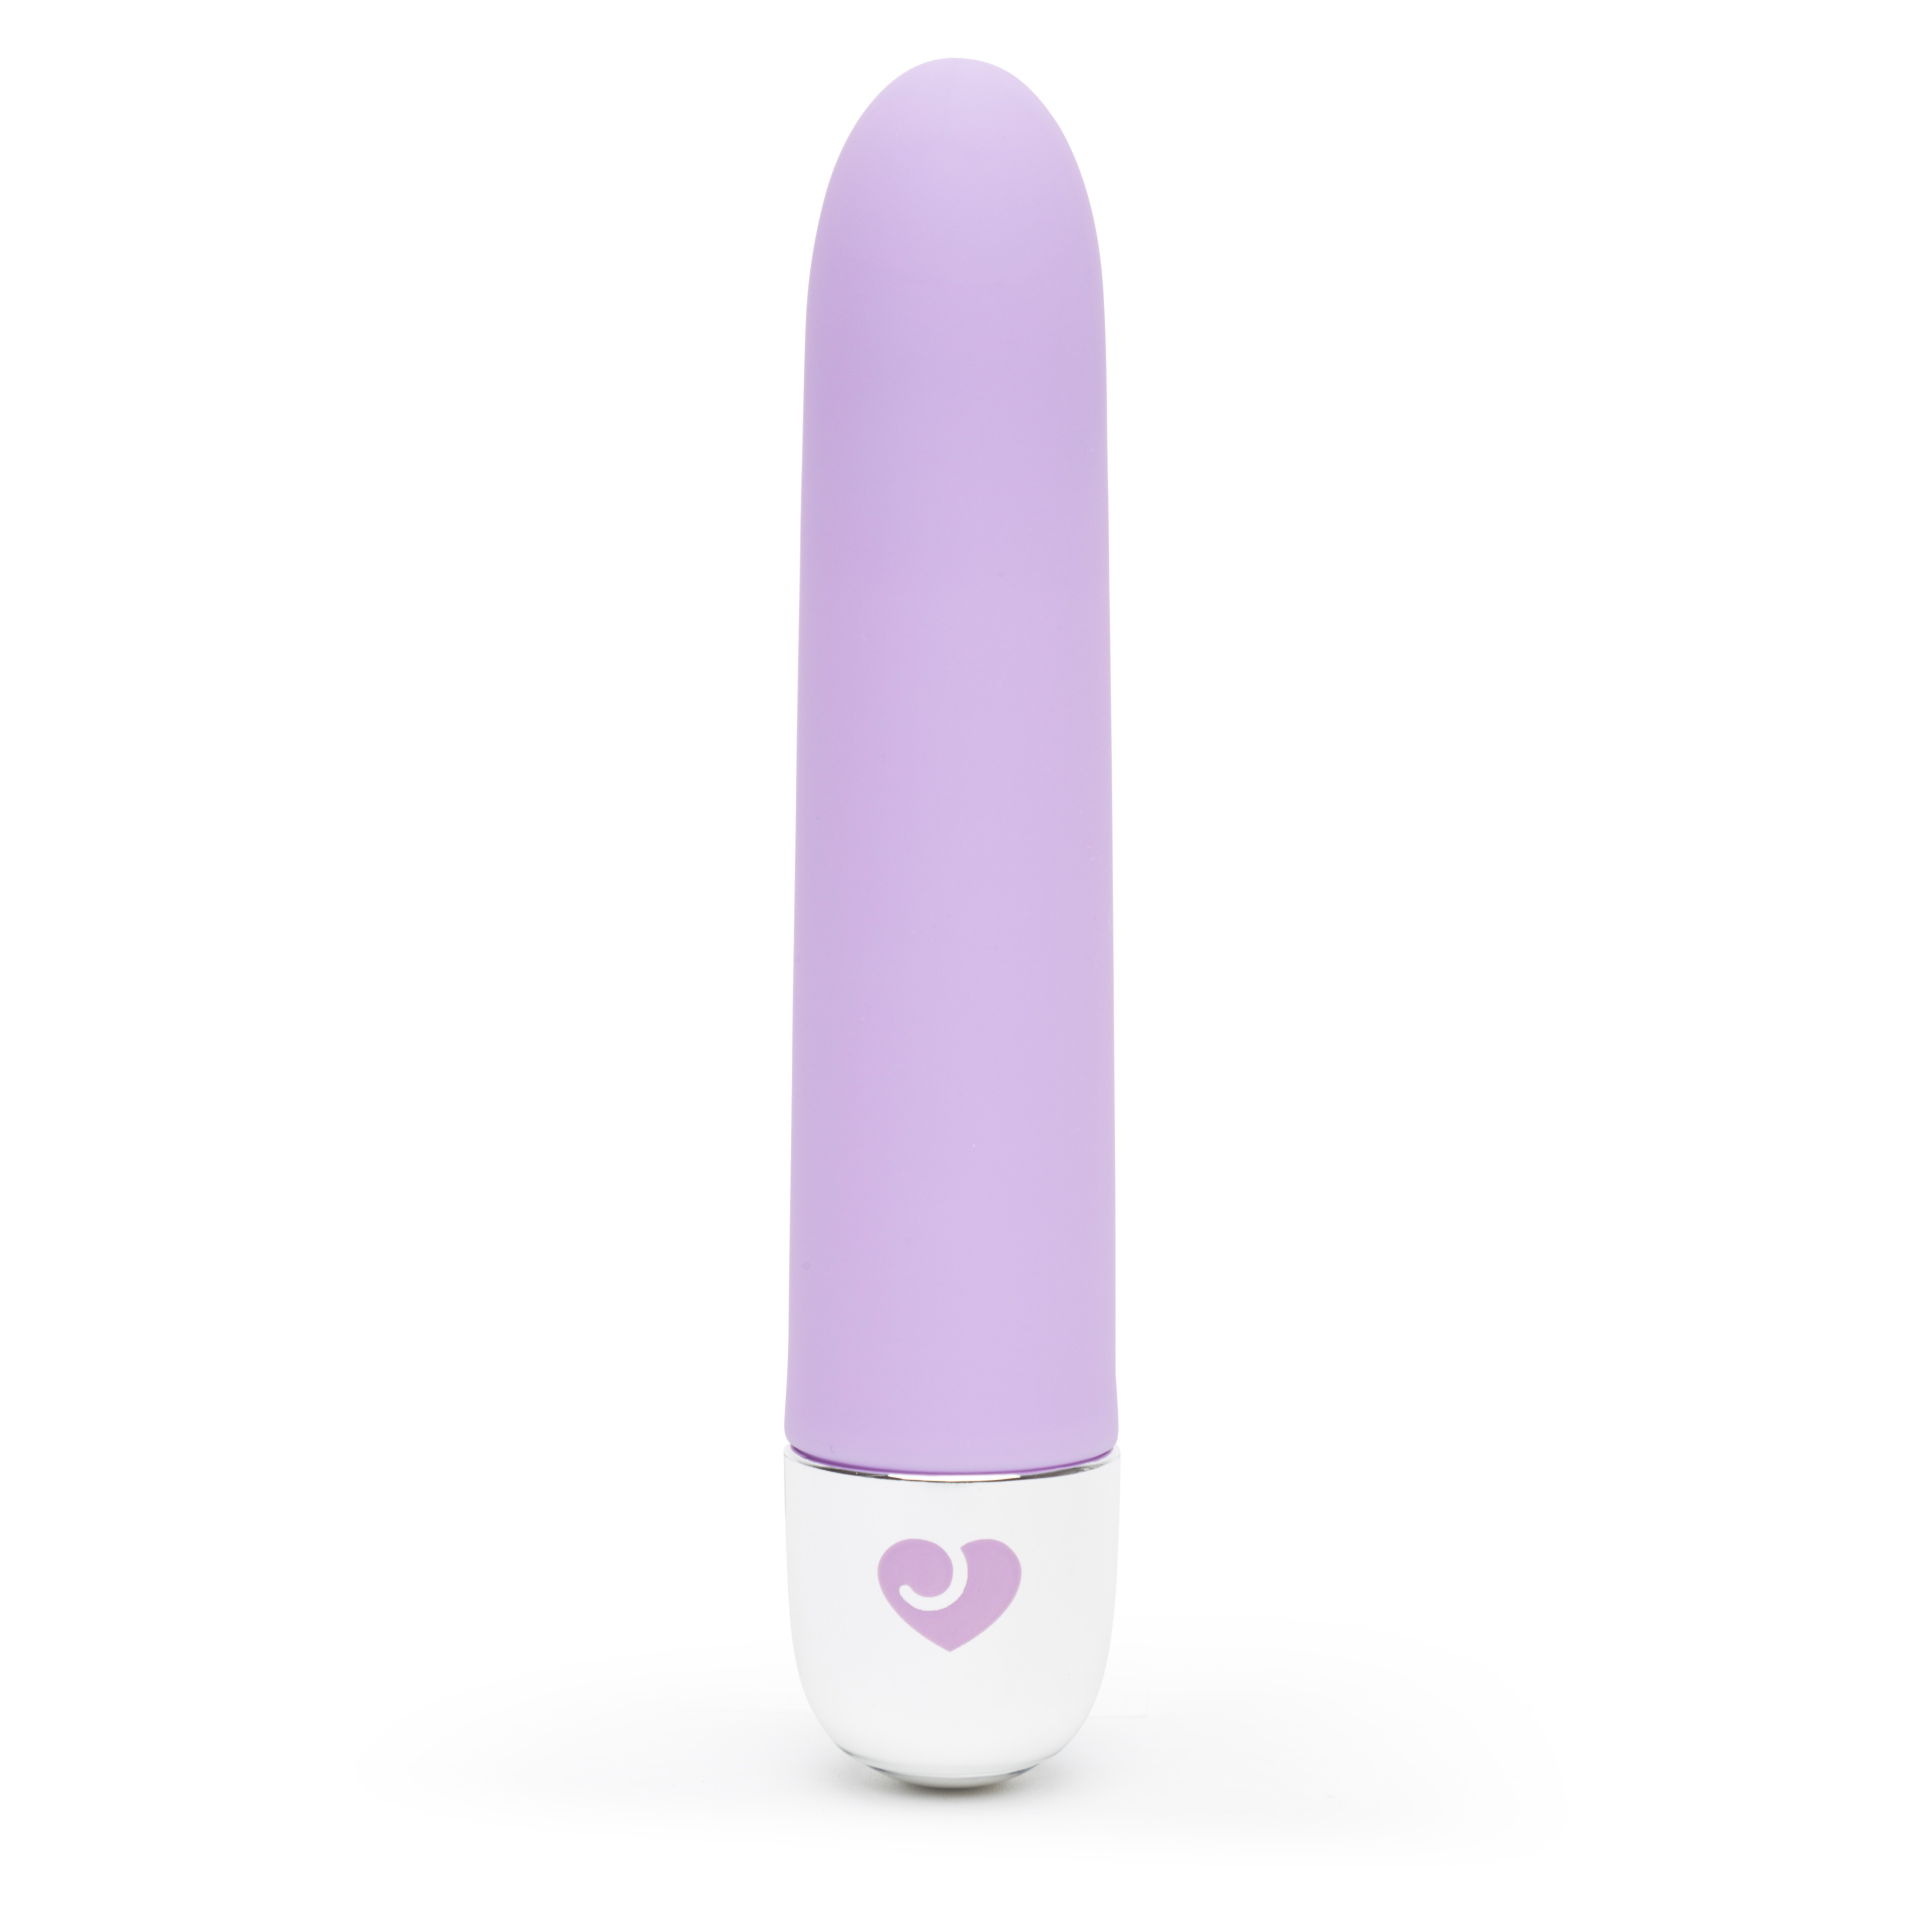 Lovehoney Glow 10 Function Purple Silicone Classic Vibrator 